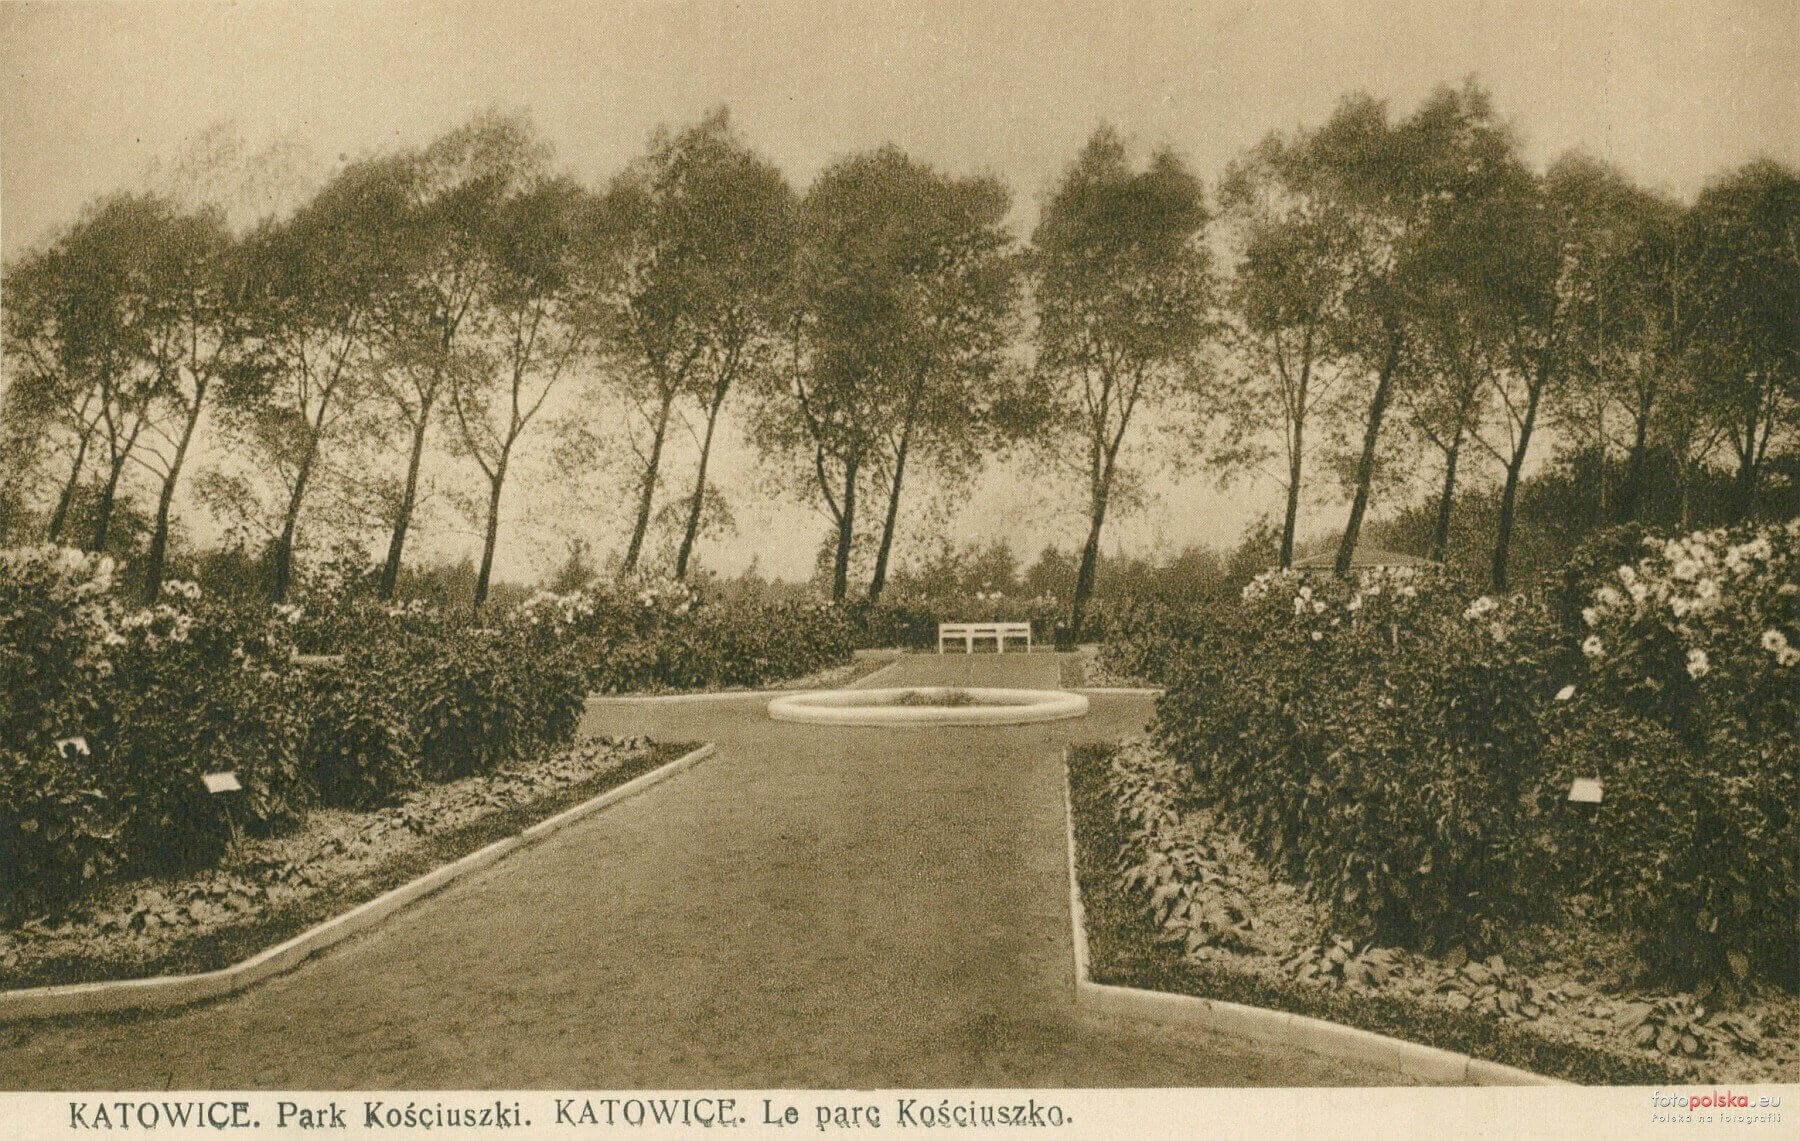 Park Kościuszki, Katowice